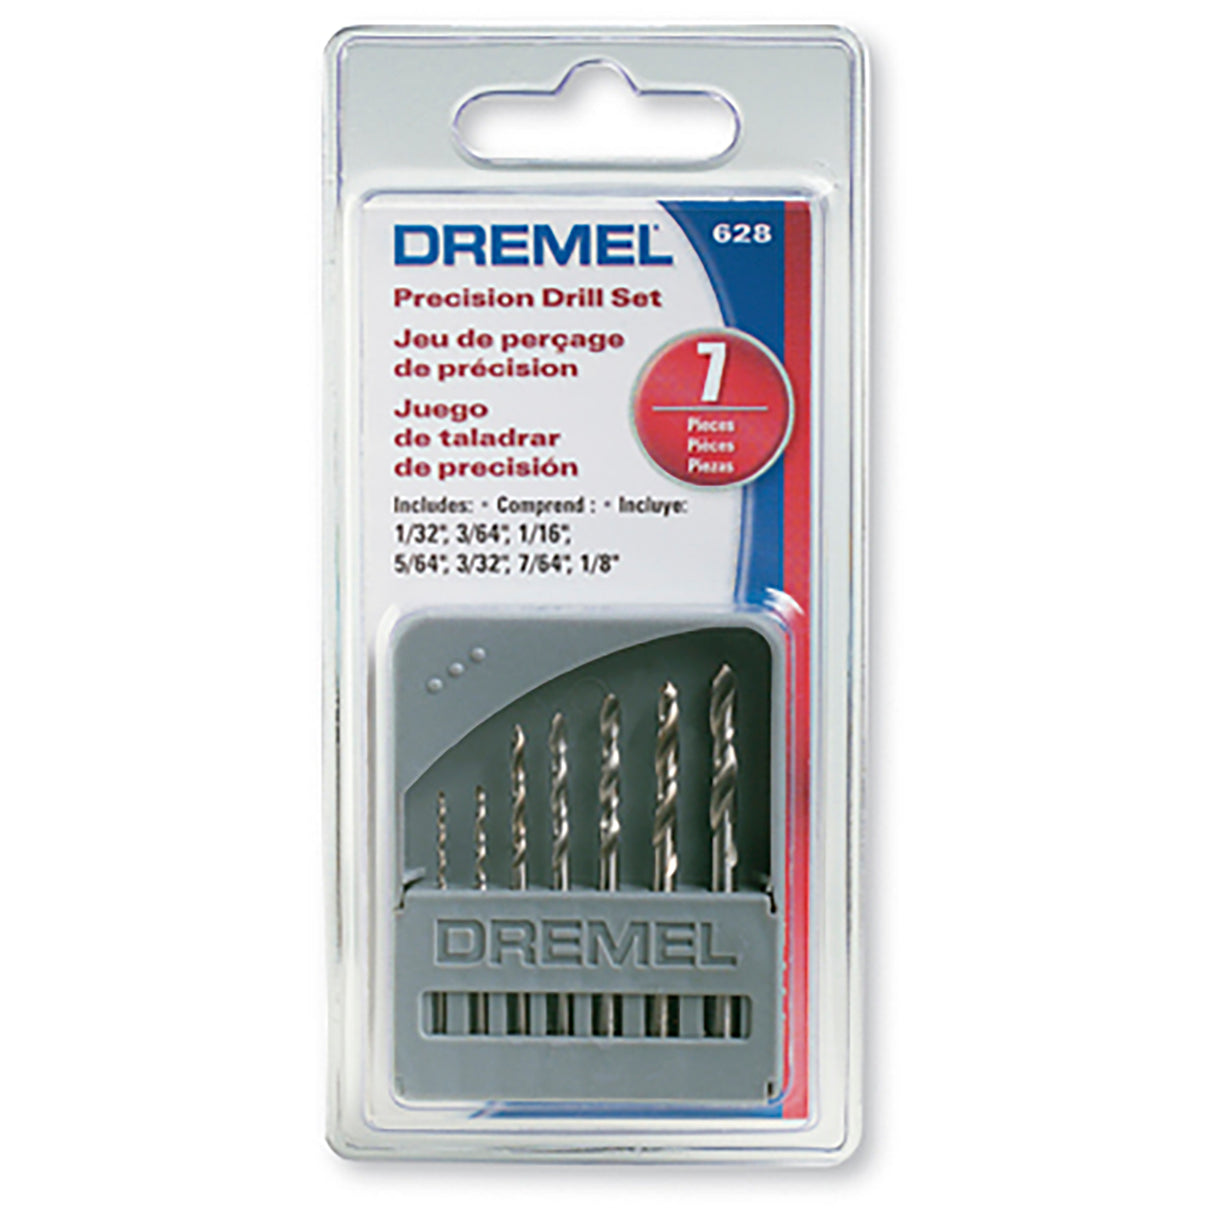 Dremel 7 Piece Mini Drill Bit Accessory Kit (628) - Hobbytech Toys